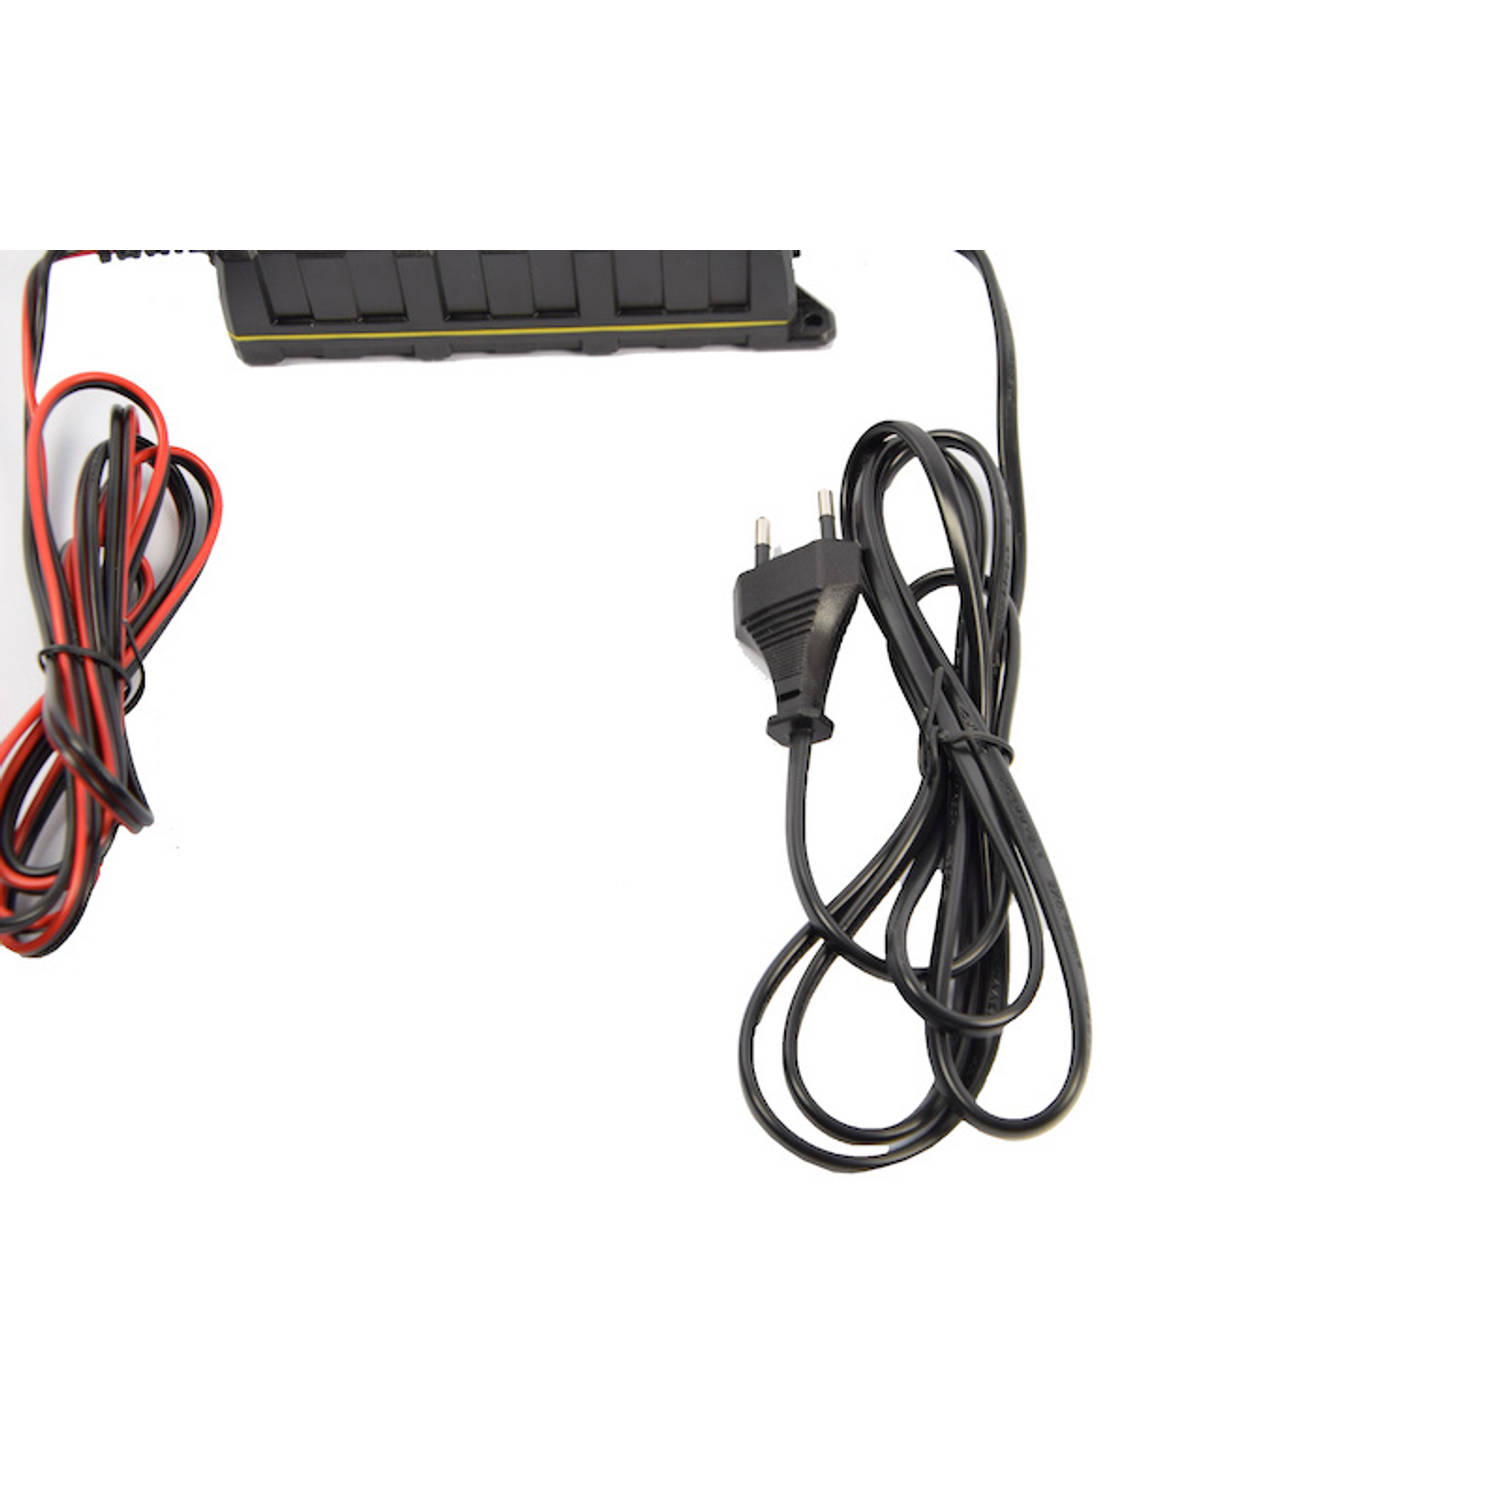 Accu druppel oplader - 12 volt - Accu oplader - Acculader - Acculader voor Auto Motor Scooter Boot | Blokker